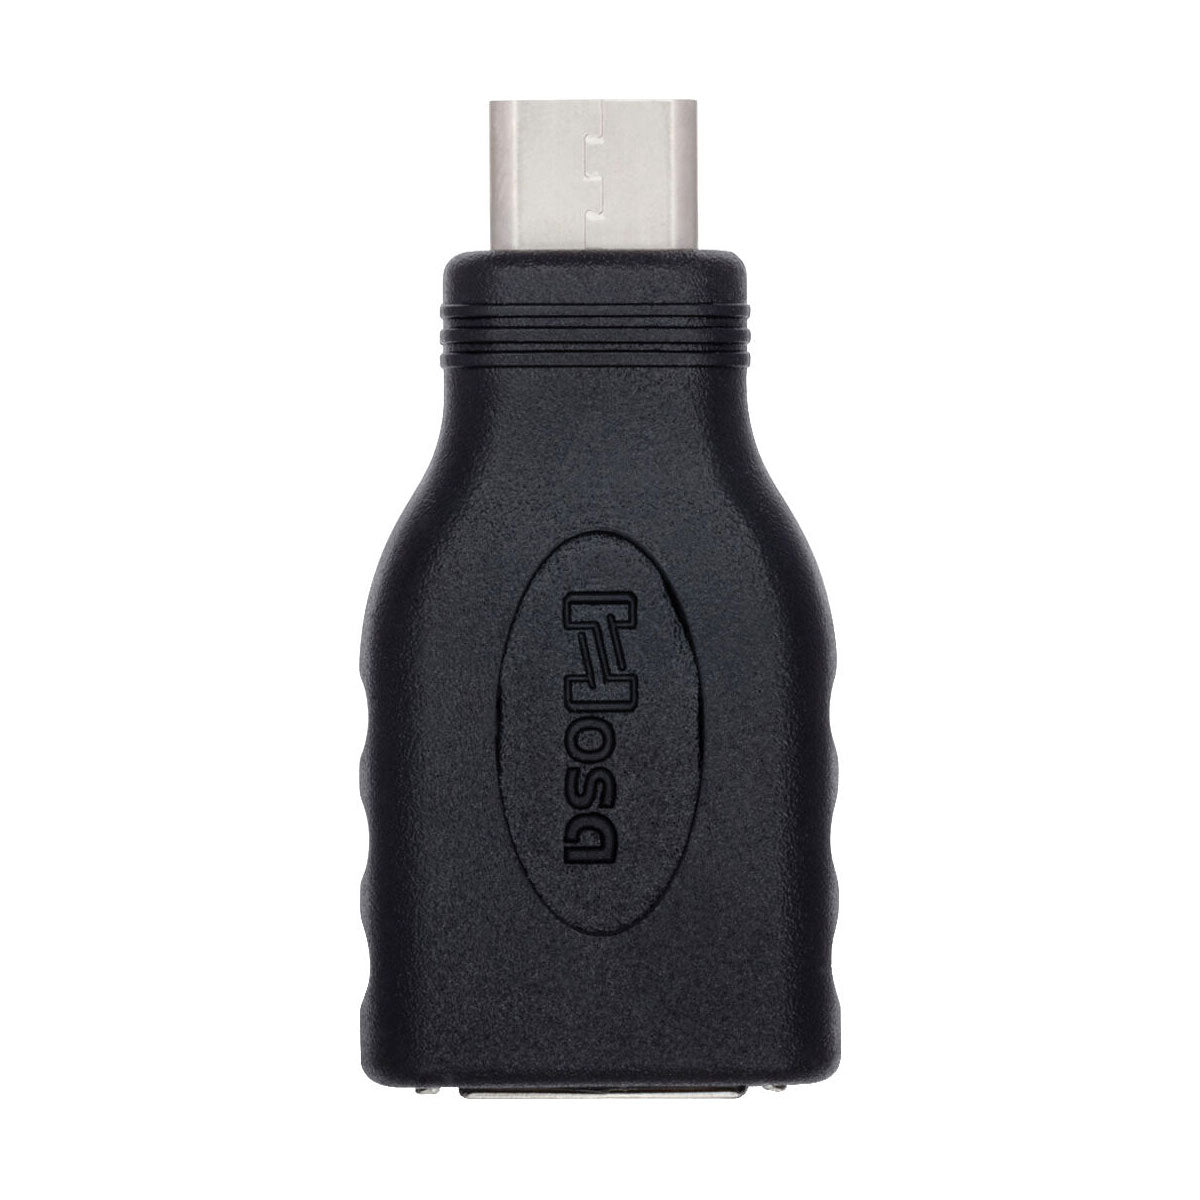 Hosa Technology USB-A Female to USB-C Male 3.0 Adapter